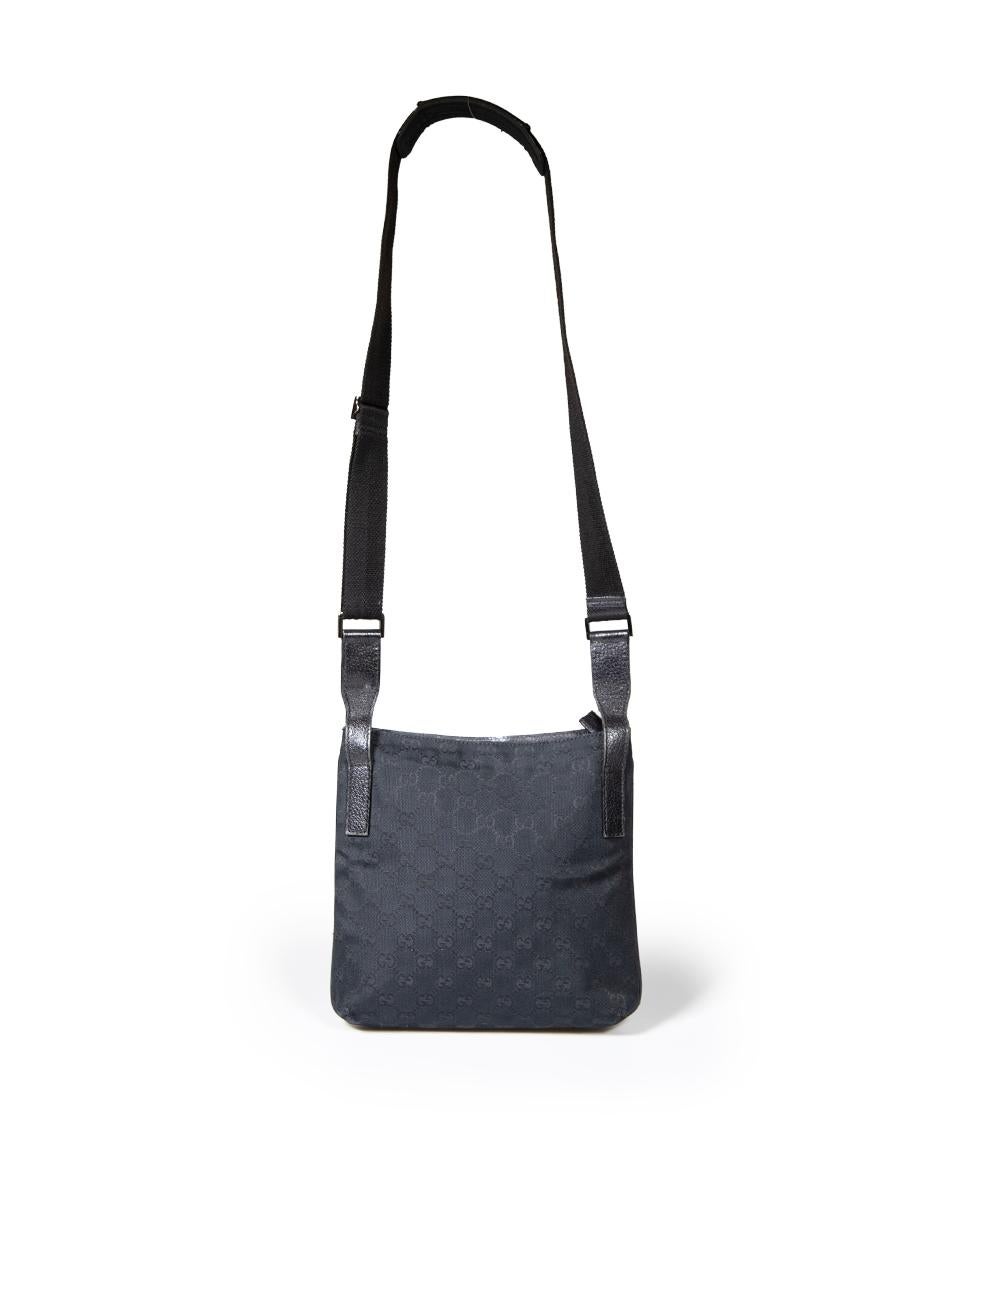 Gucci Black Supreme GG Crossbody Bag In Good Condition For Sale In London, GB